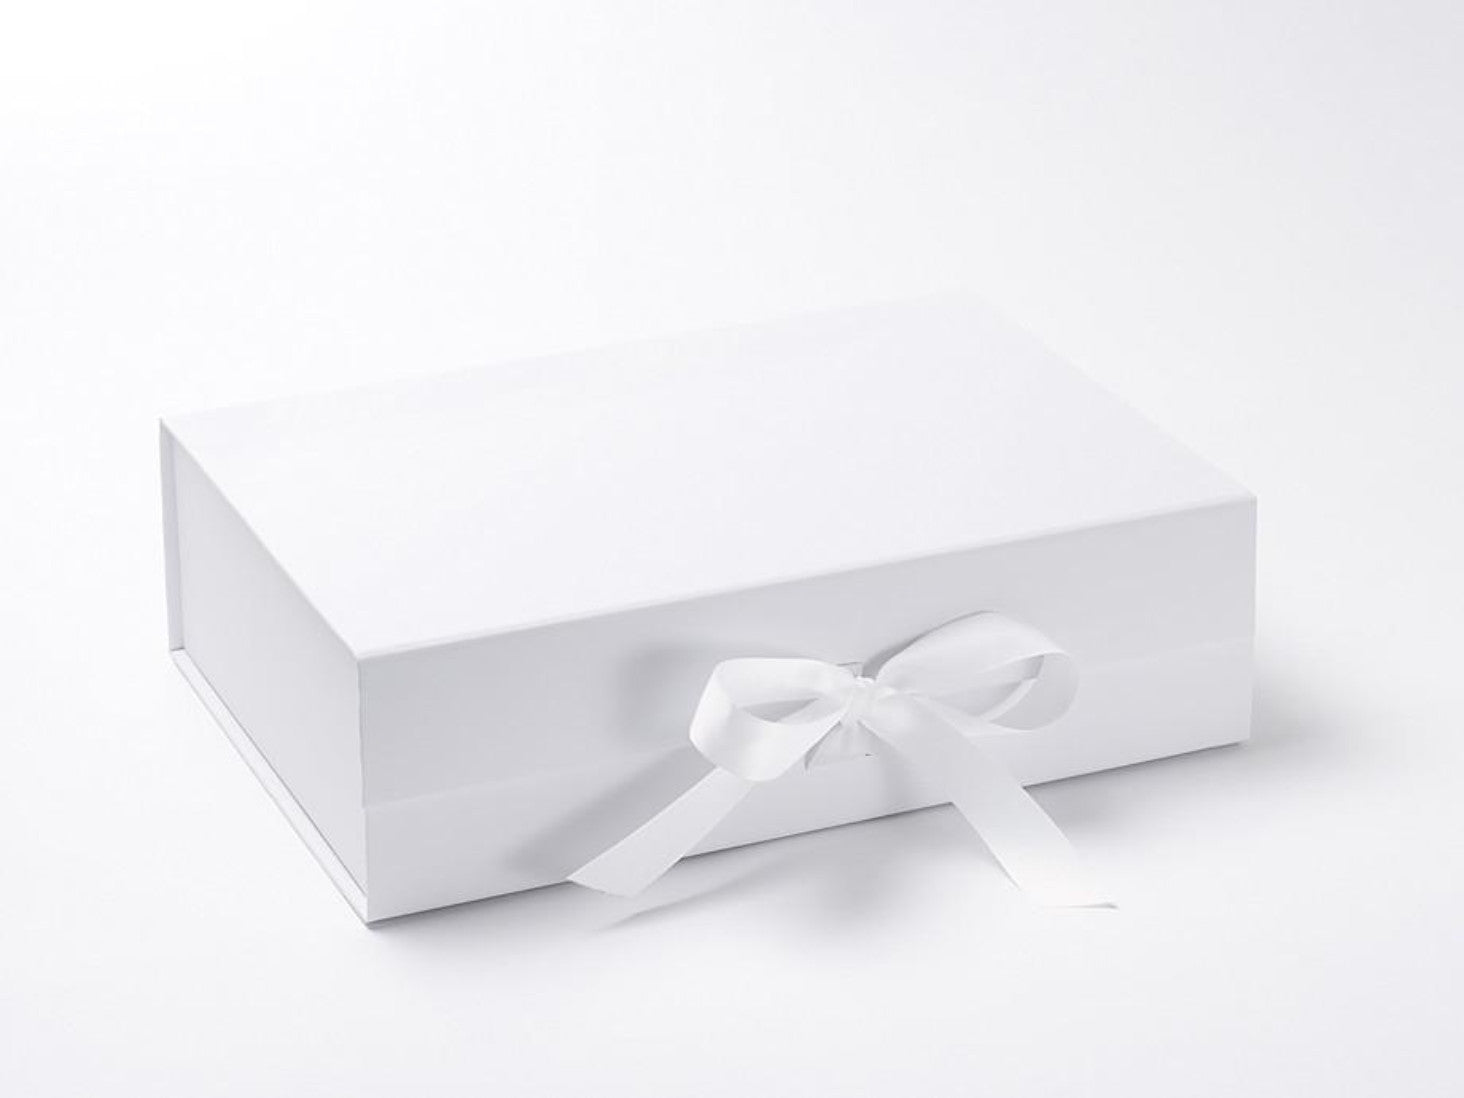 Authentic LOUIS VUITTON Magnetic Closure Gift Box 14 x 10.25 x 5.25  Ribbon